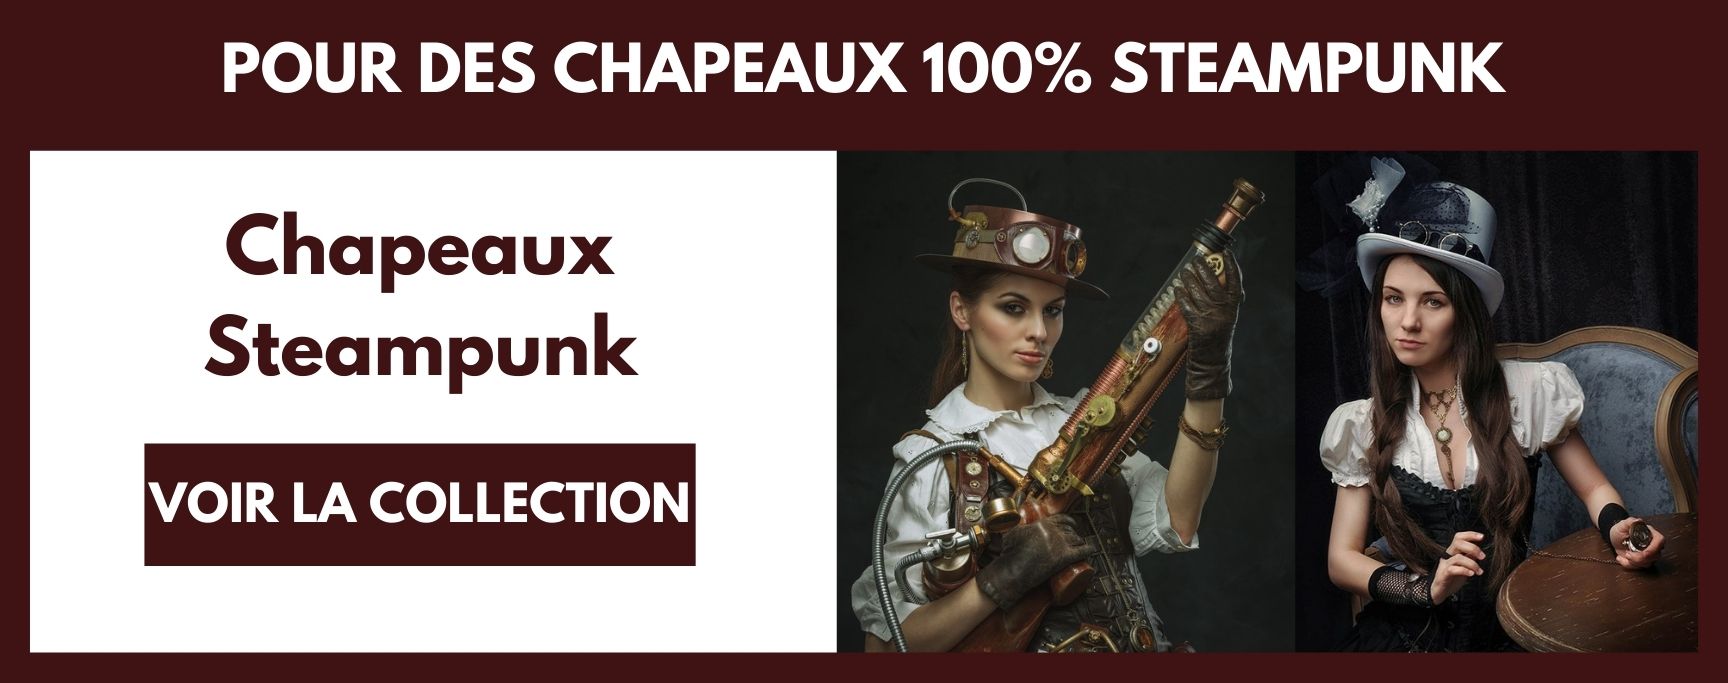 chapeaux steampunk